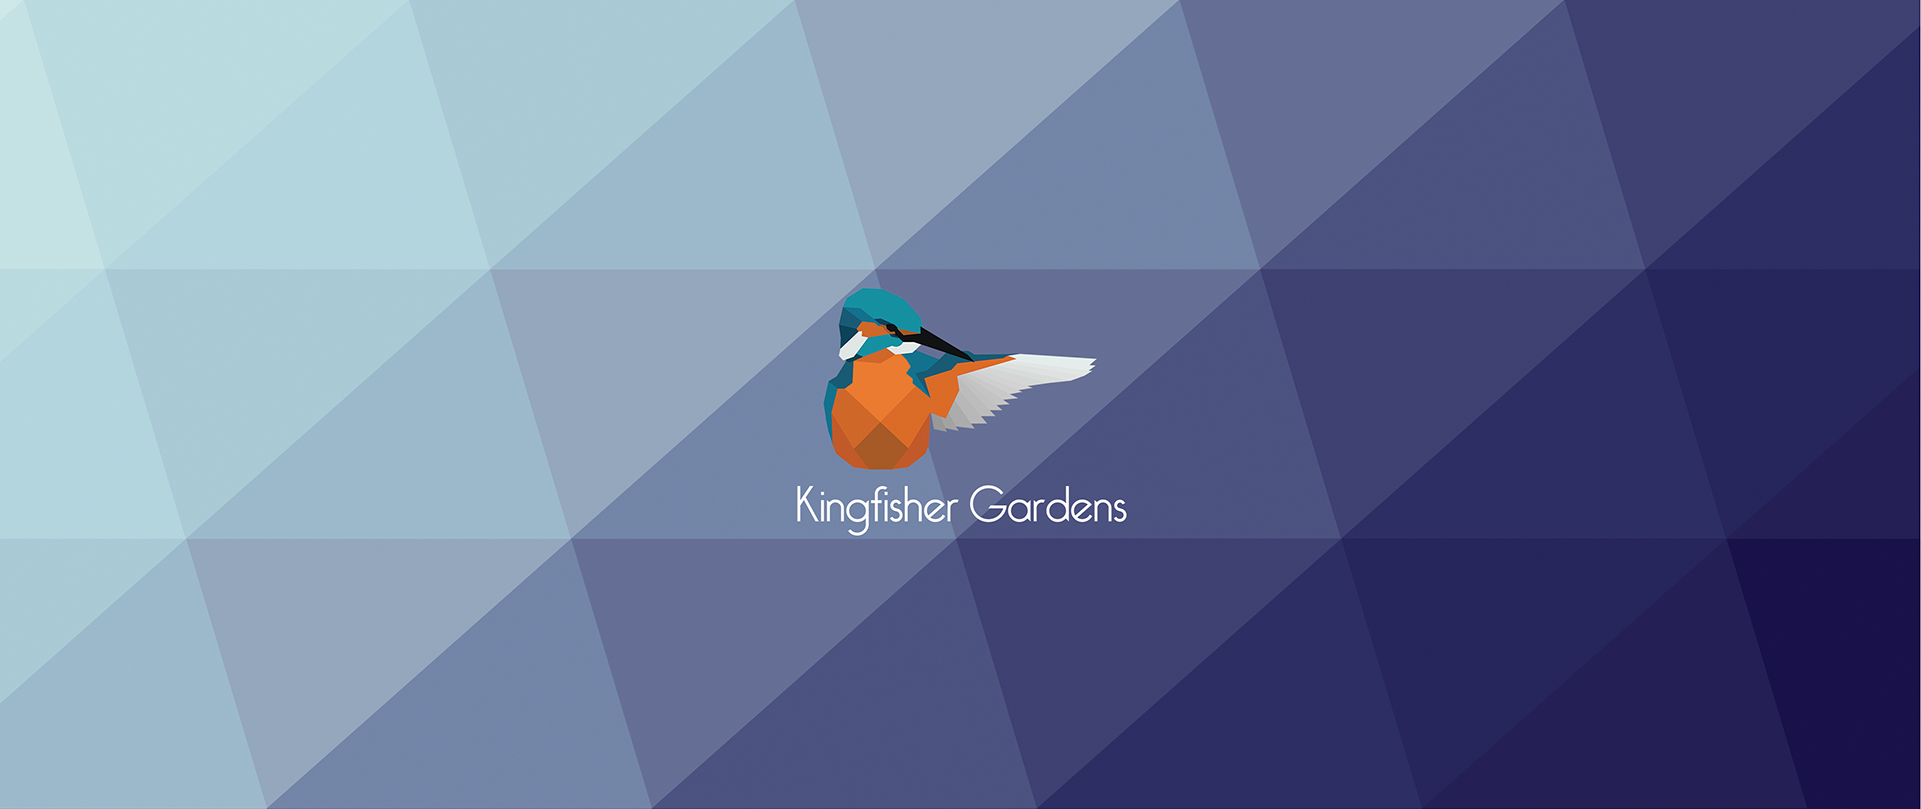 Kingfisher Gardens branding and brochure design